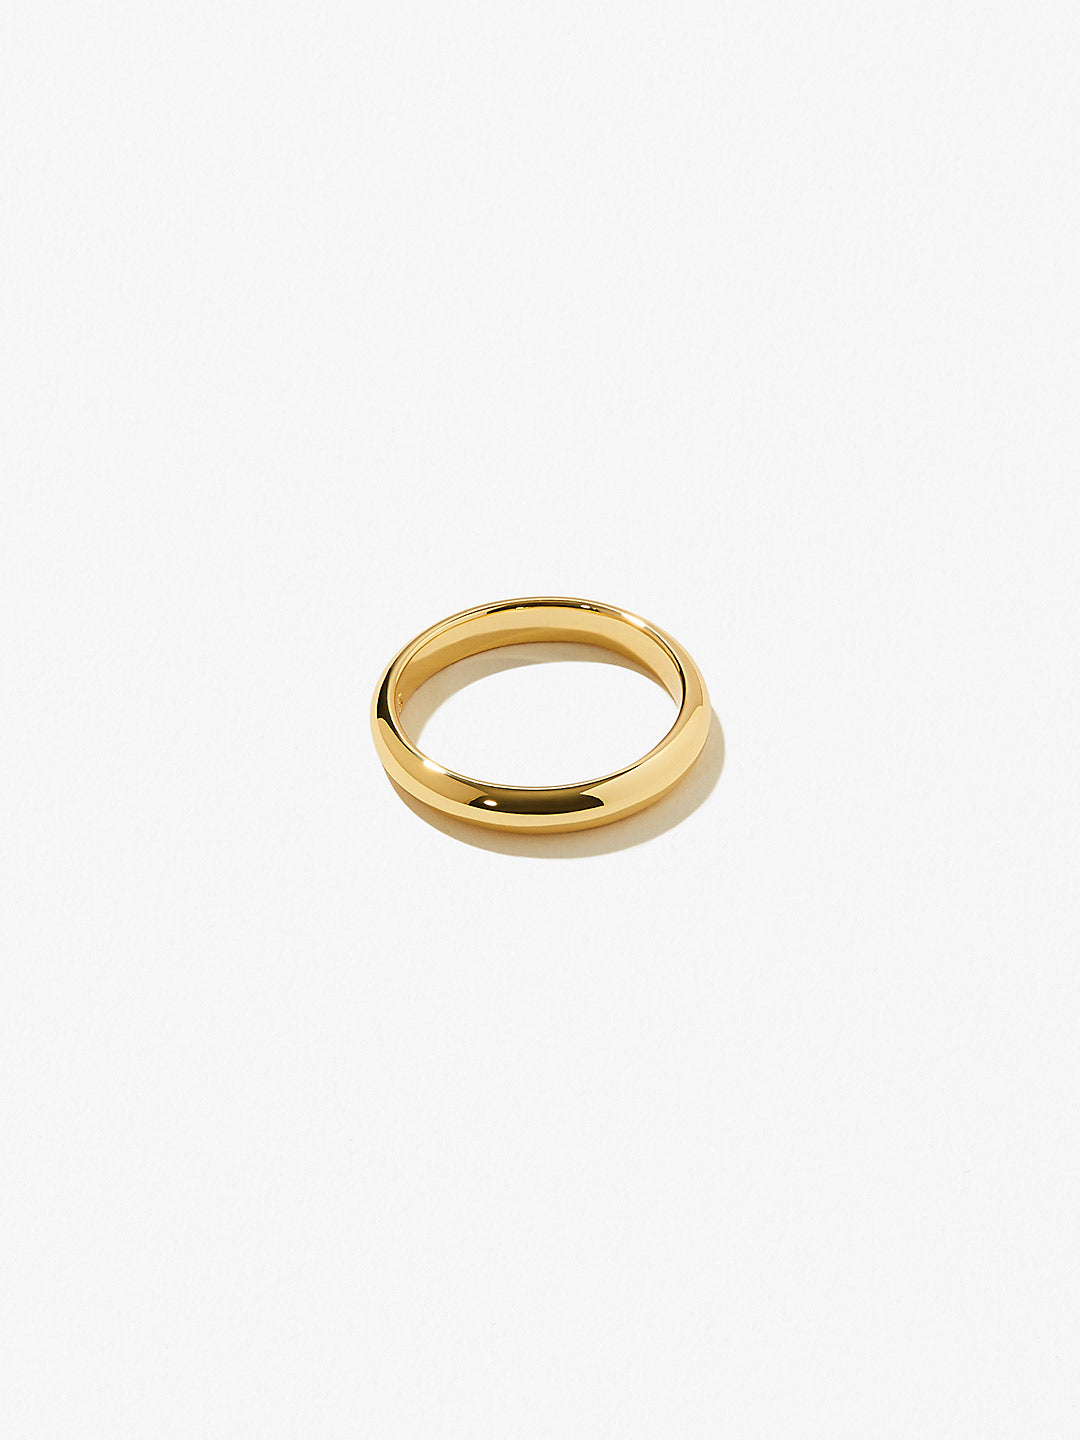 Fancy Greek Key Design Matching Wedding Rings - HH-LWB151 - 14K Gold